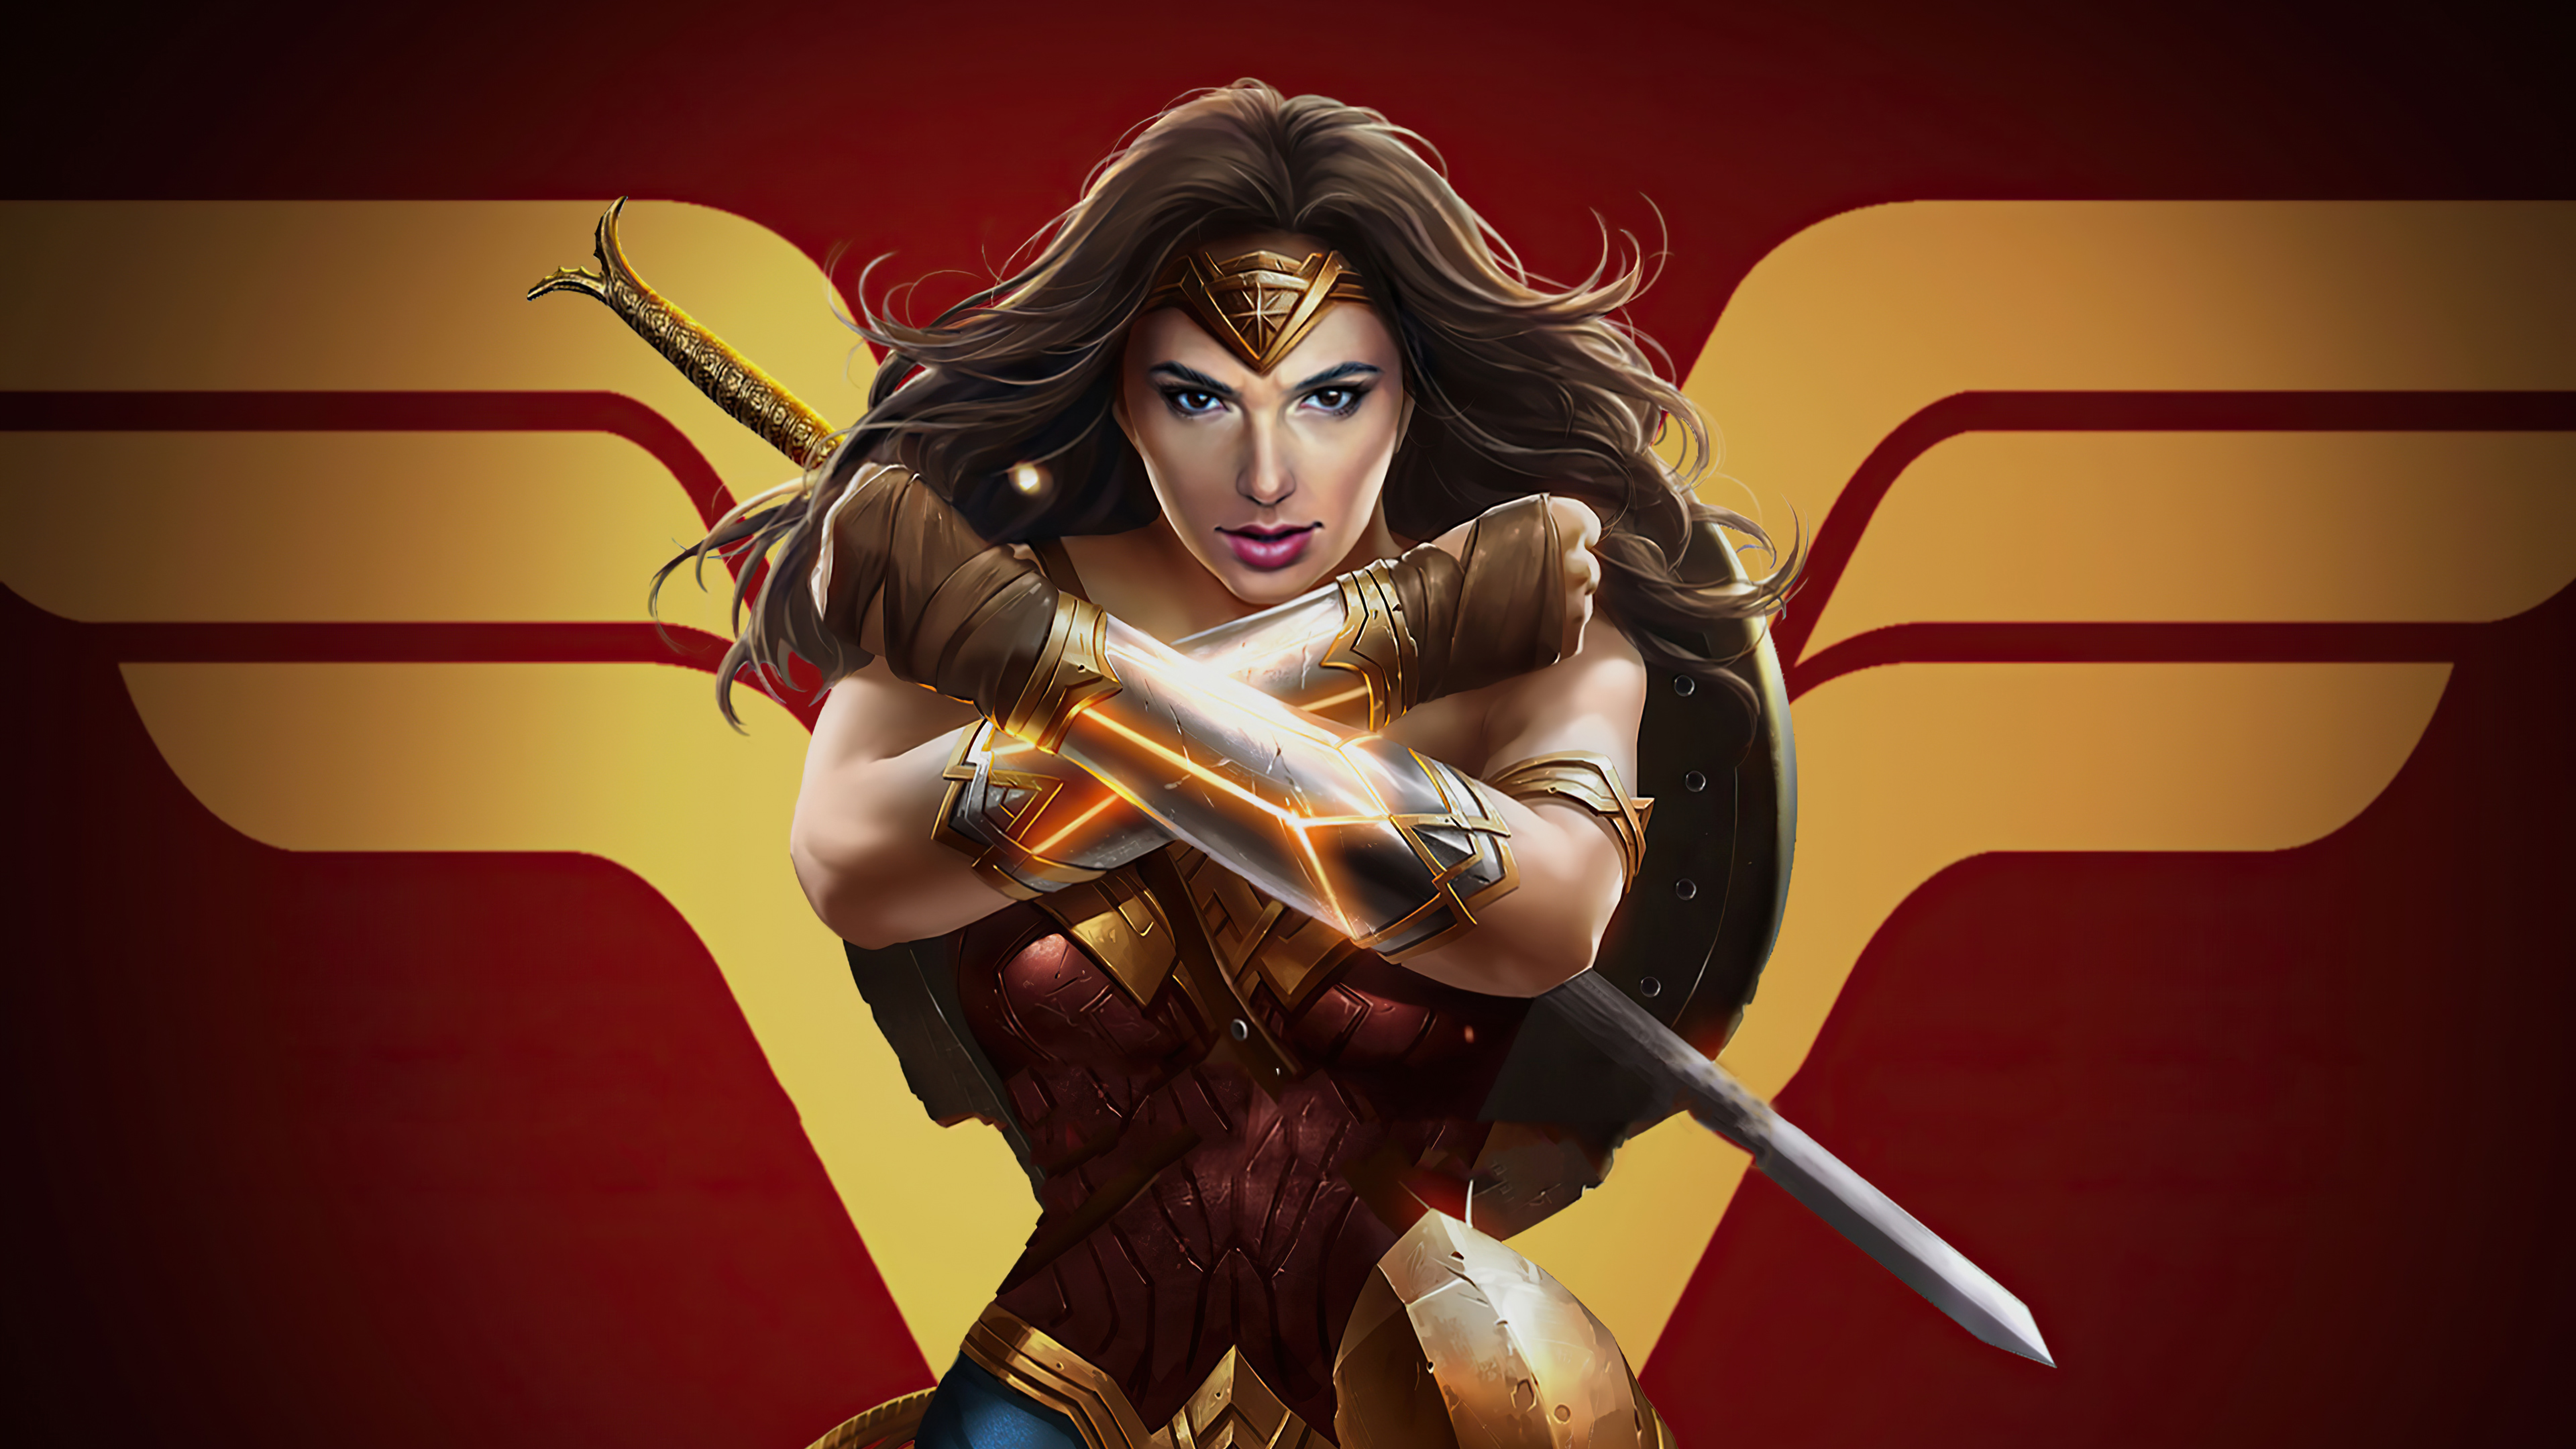 Wonder Woman DC Princess Diana 4K wallpaper download